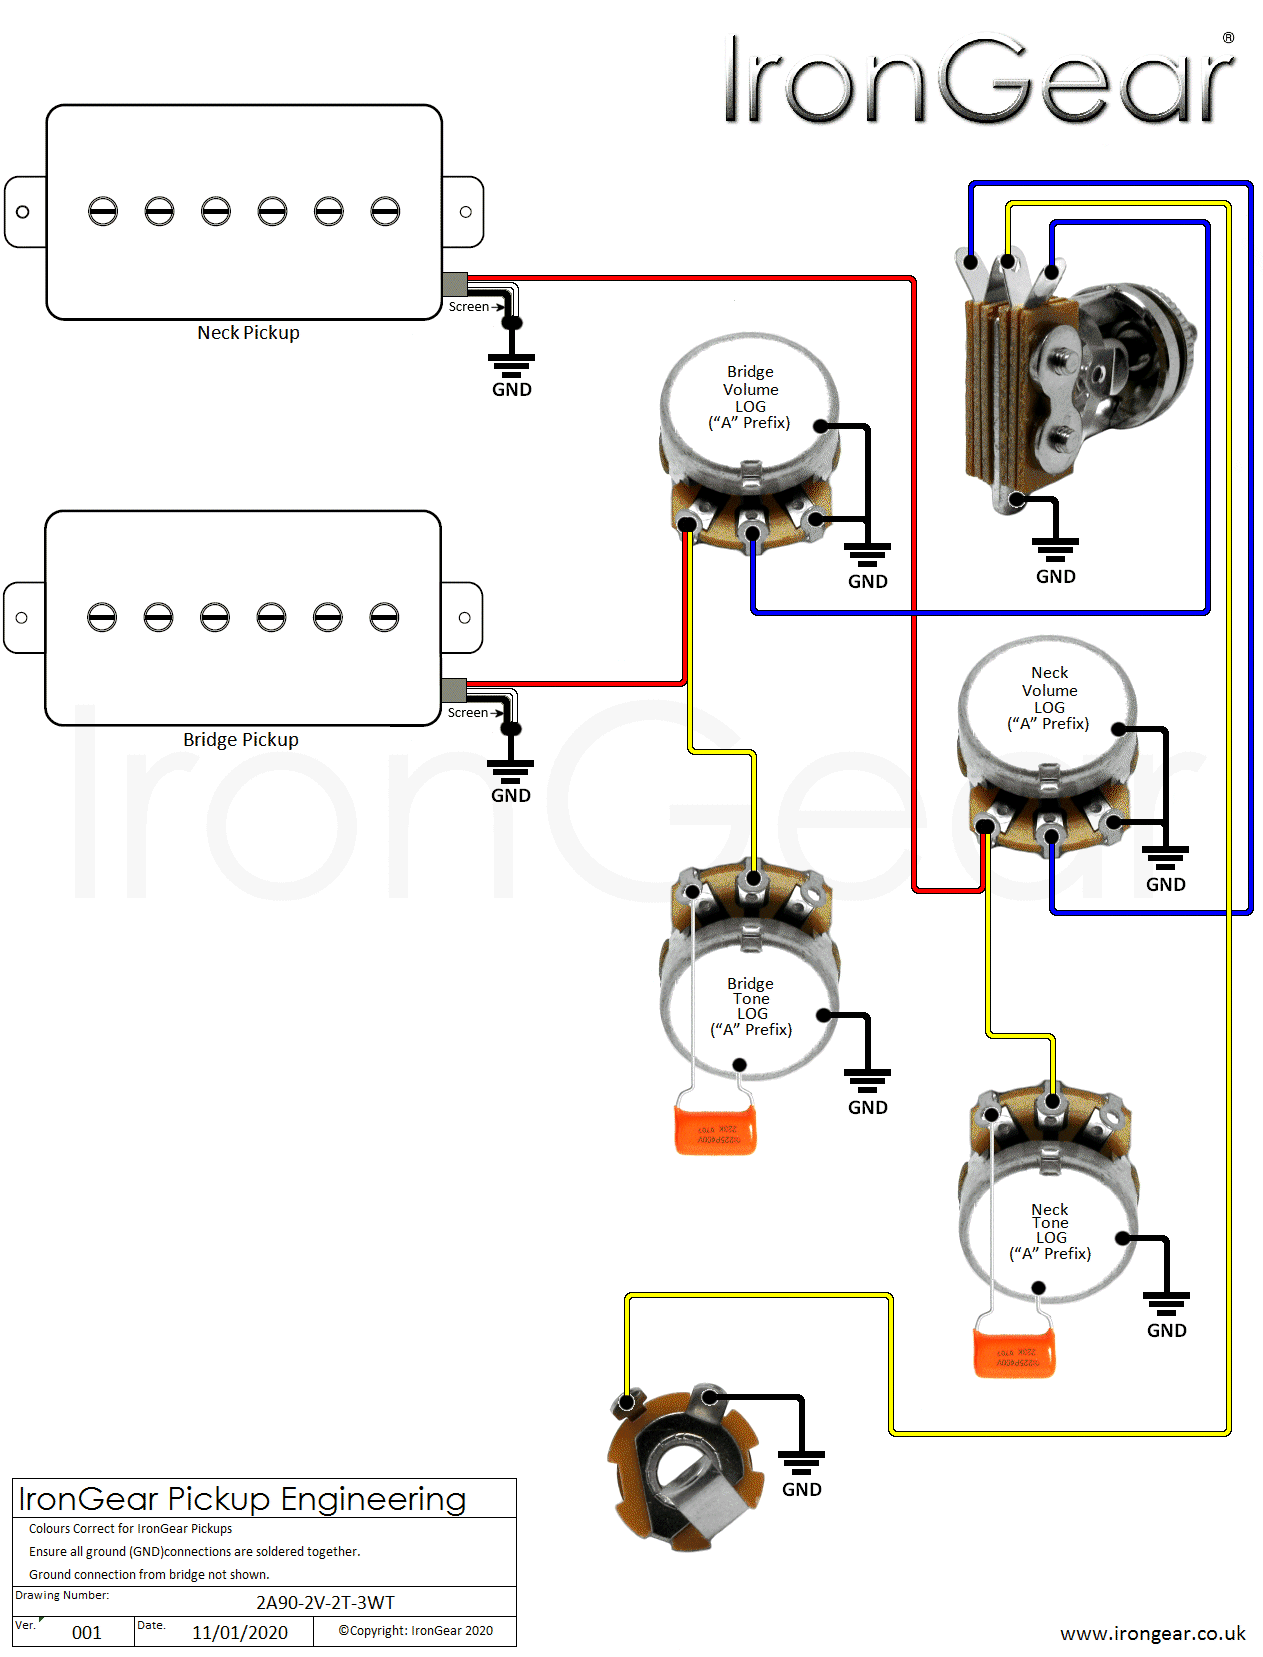 Humbucker Single Coil Wiring Diagram from www.irongear.co.uk